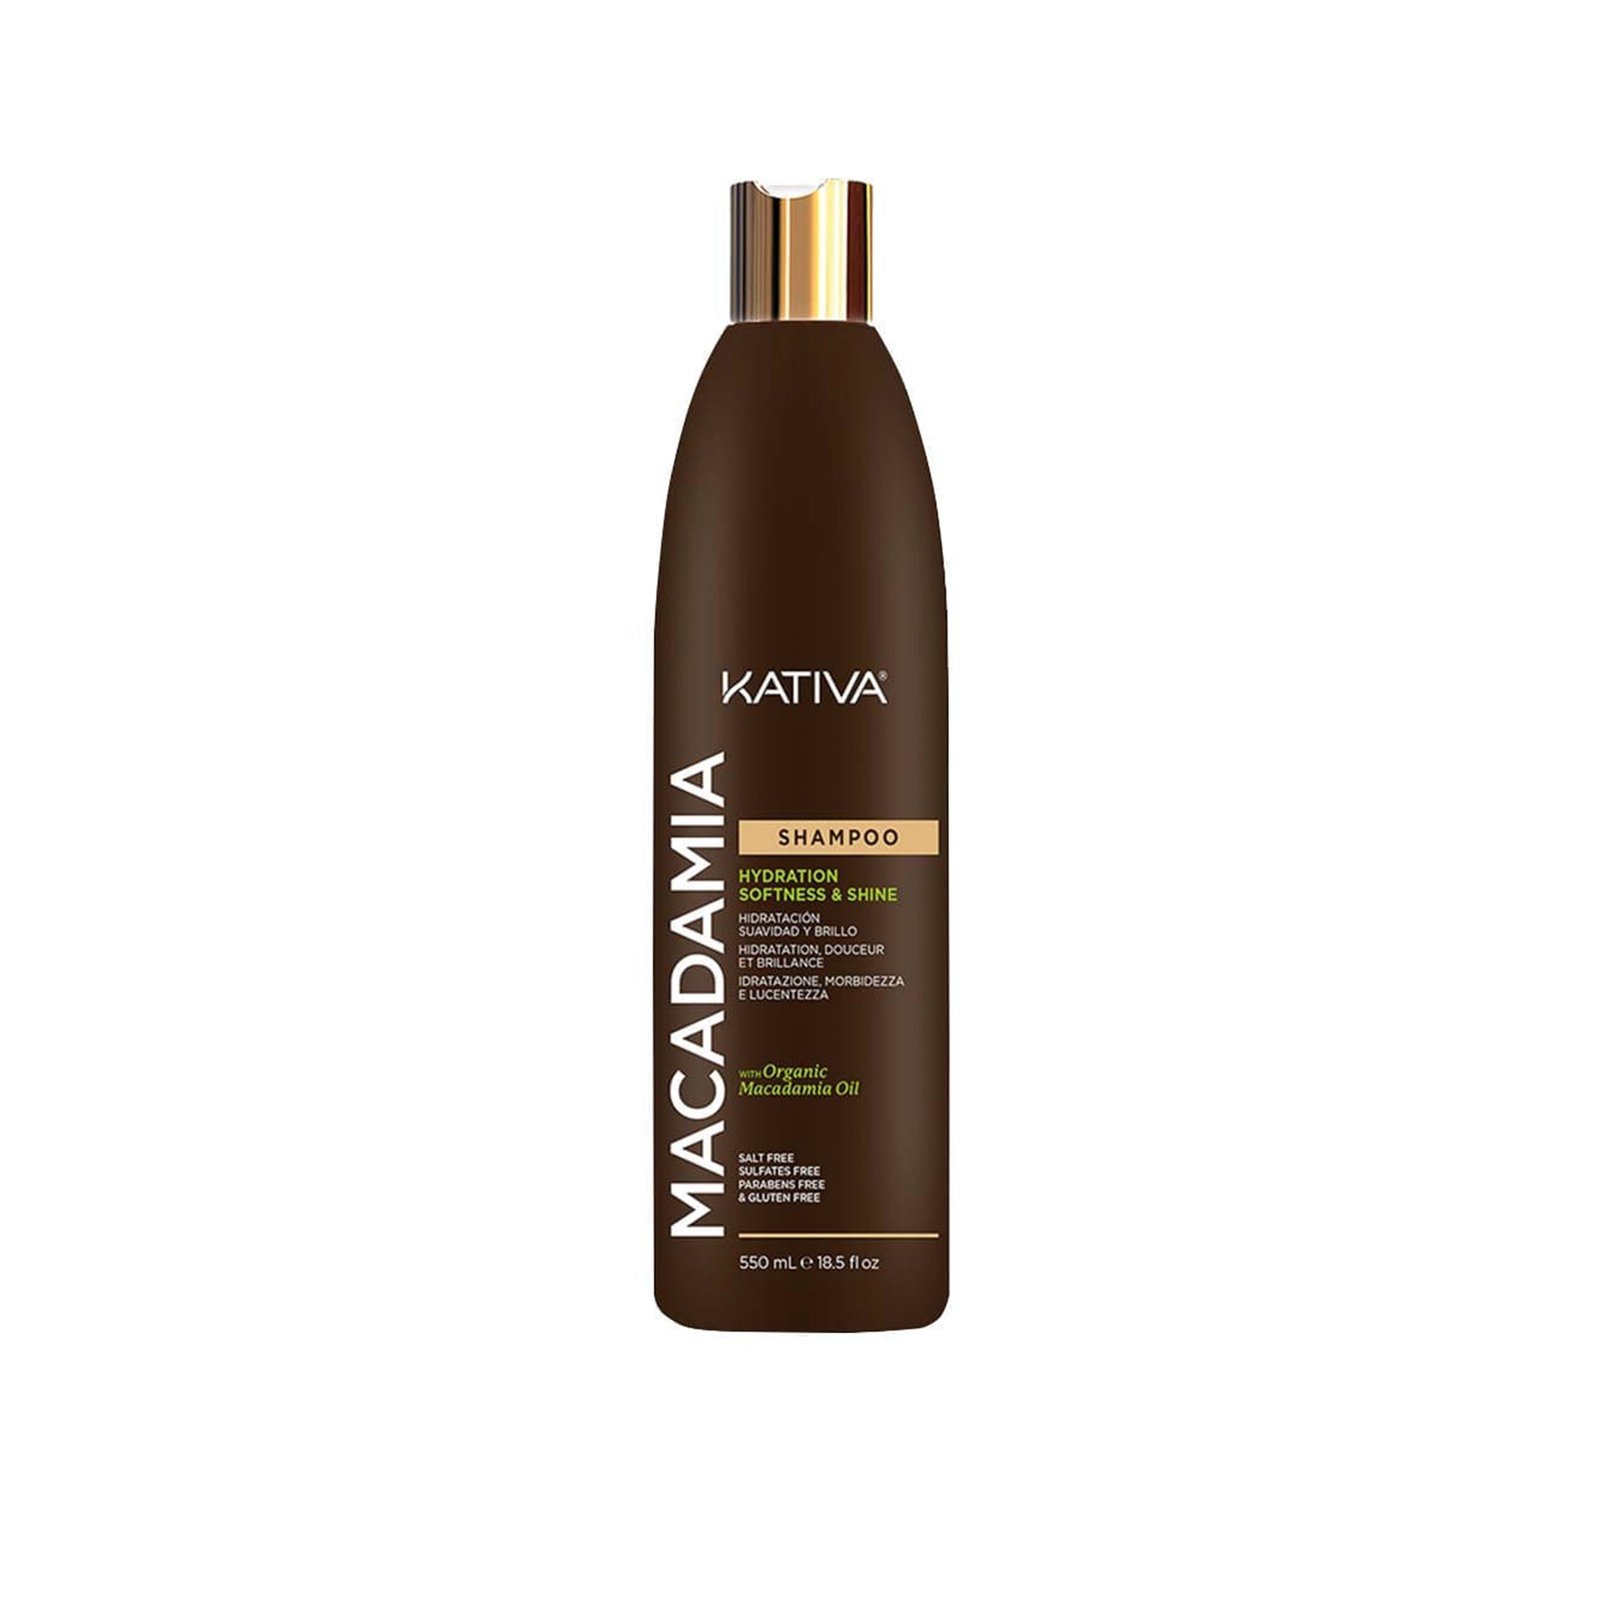 Kativa Macadamia Hydration Softness & Shine Shampoo 550ml (18.5 fl oz)